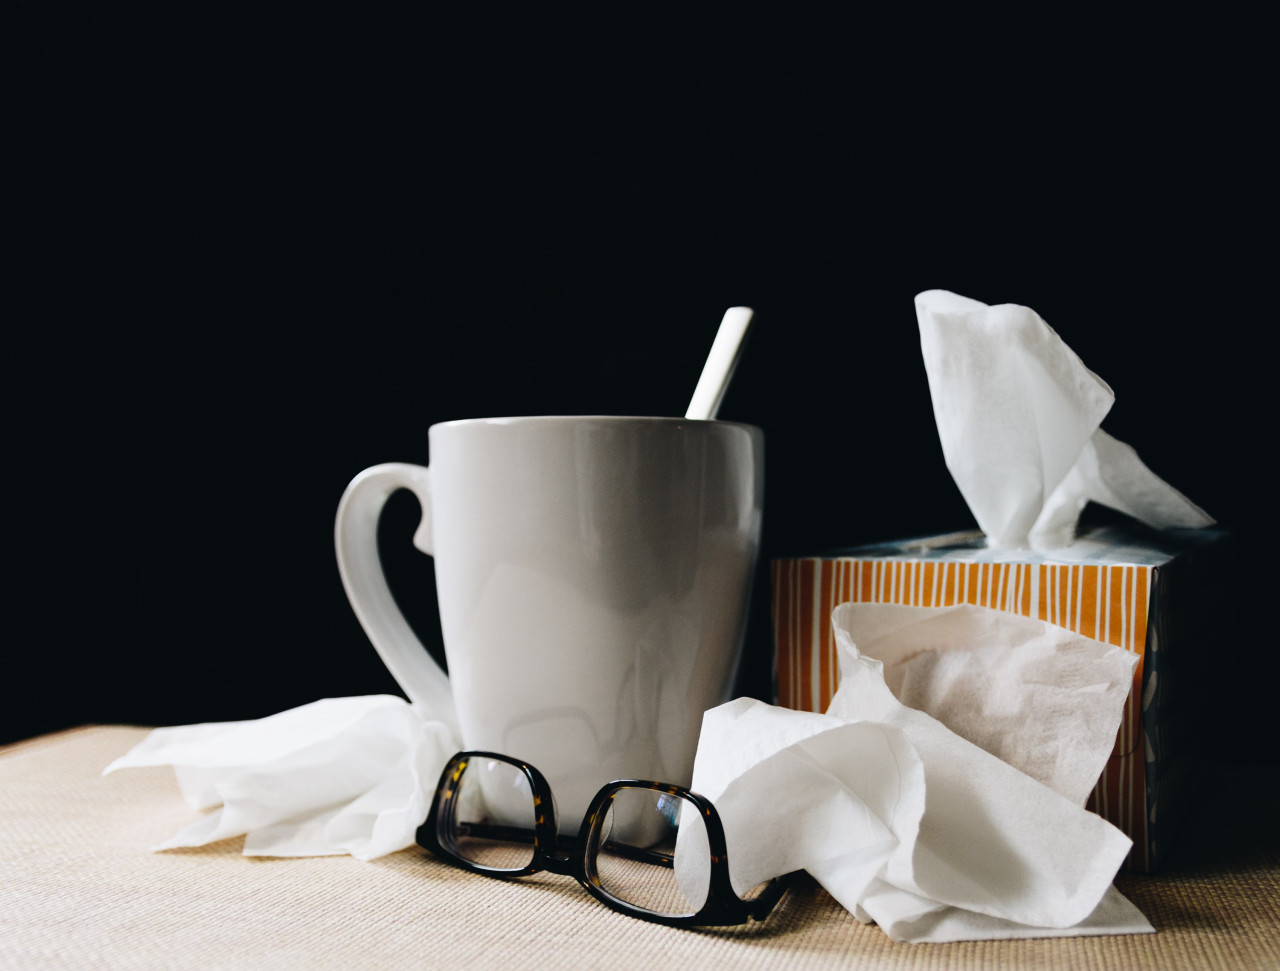 Hoe voorkom je een beginnende verkoudheid?